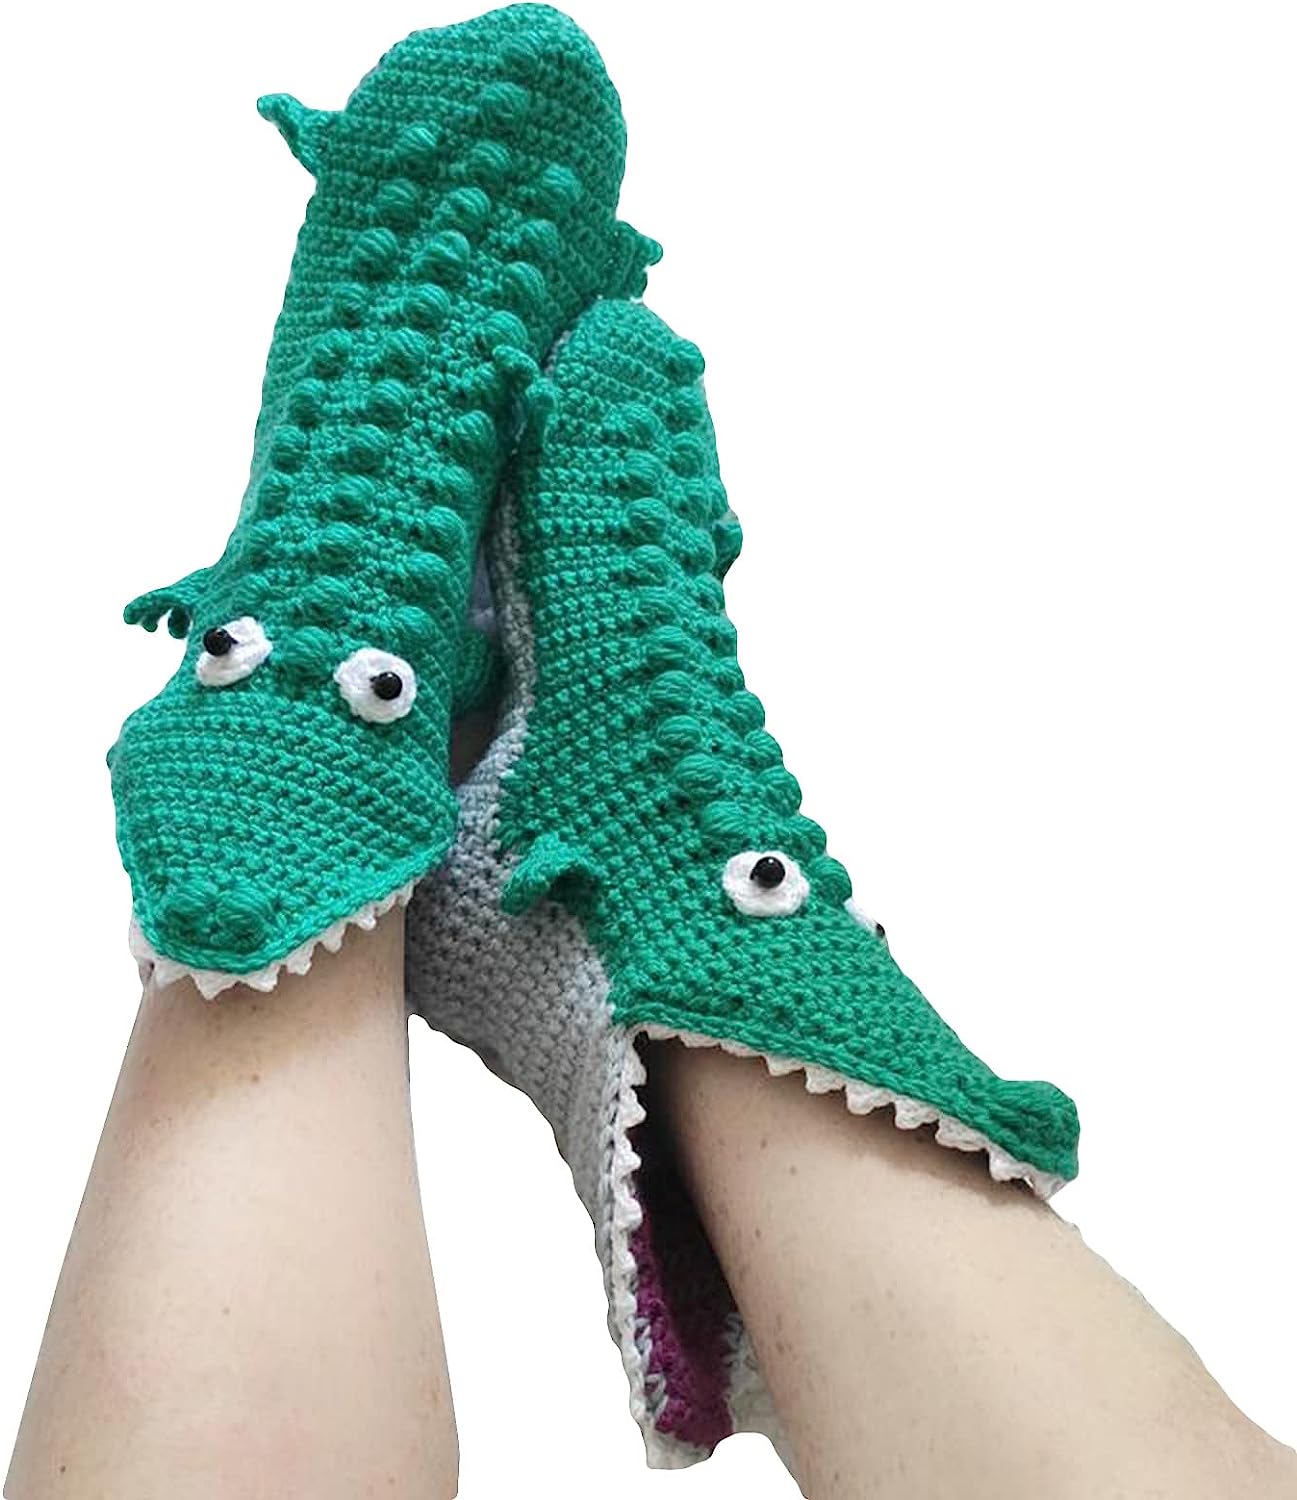 THATLILSHOP One Size / Crocodile Green Women Men Novelty Animal Pattern Socks Crazy Funny Knit Crocodile Socks Funny Gifts